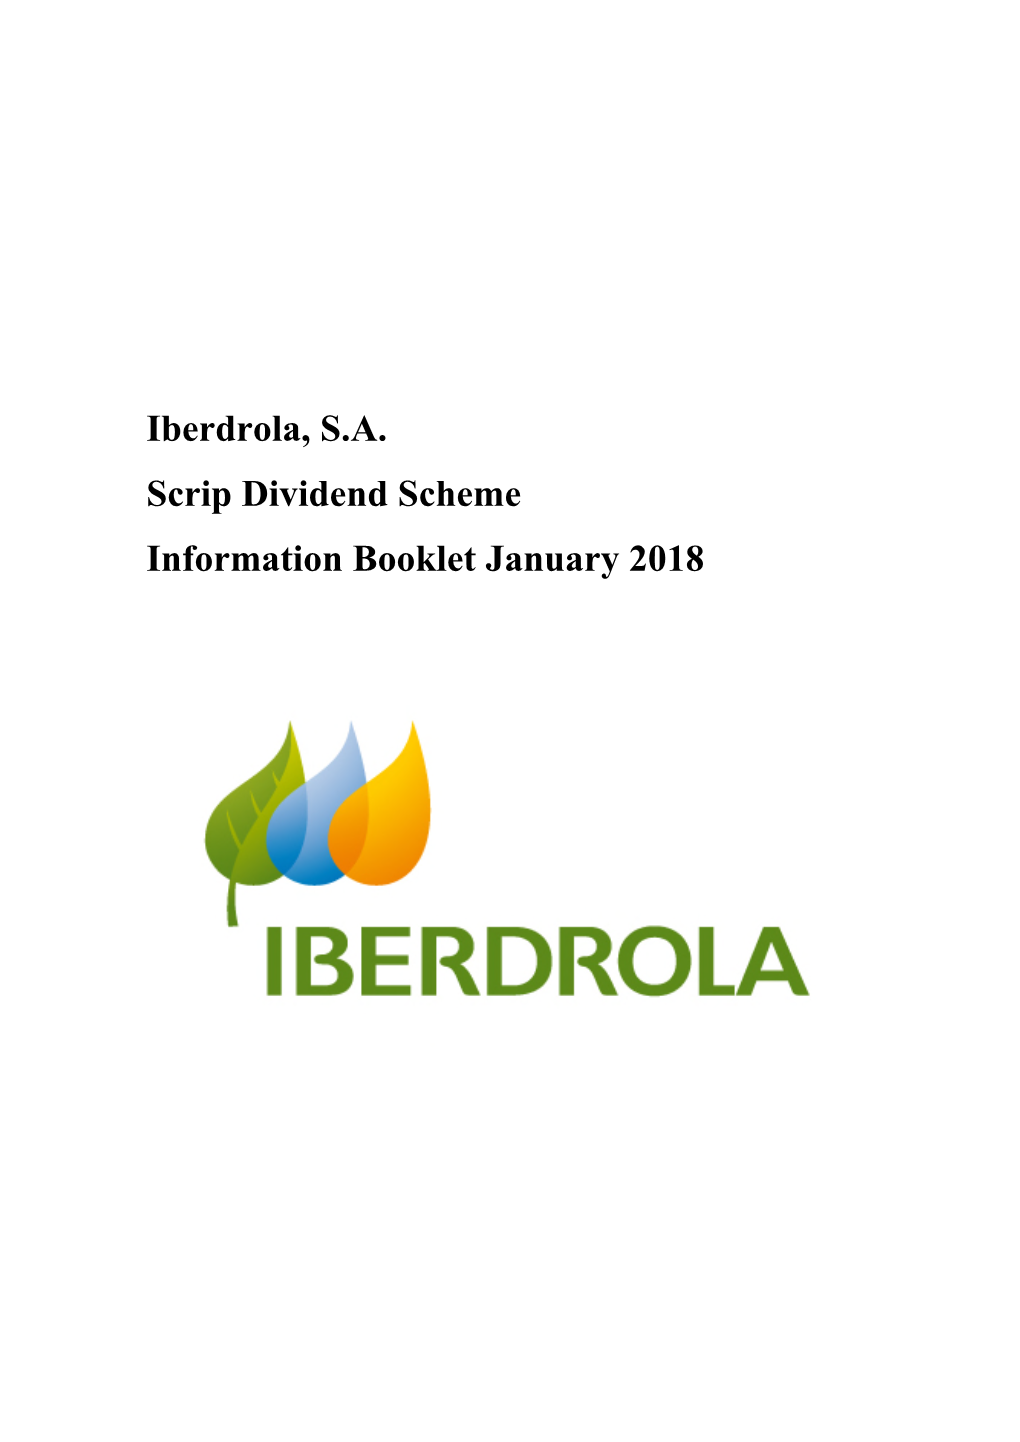 Iberdrola, S.A. Scrip Dividend Scheme Information Booklet January 2018 Dear Shareholder